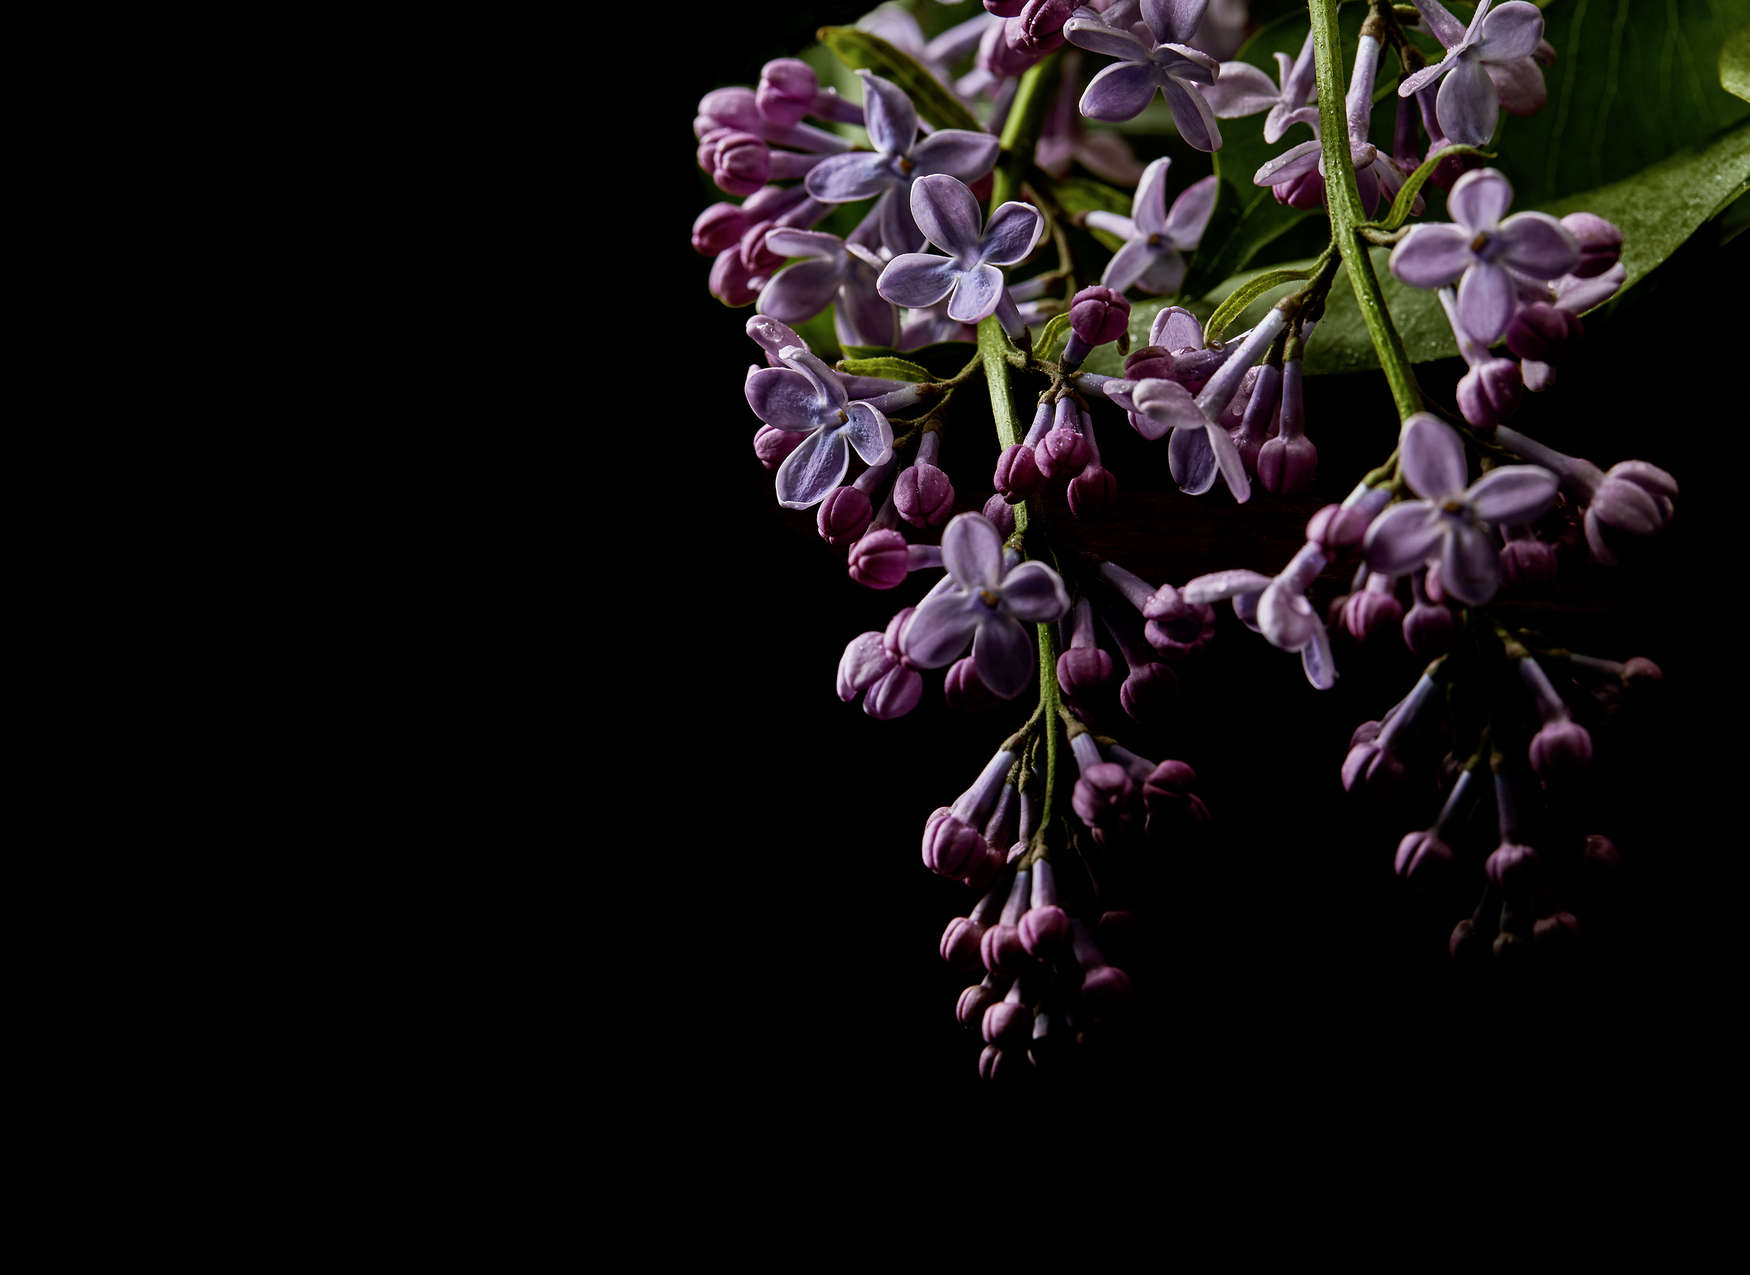             Blossoms on Black Background Close-Up Wallpaper - Purple, Black
        